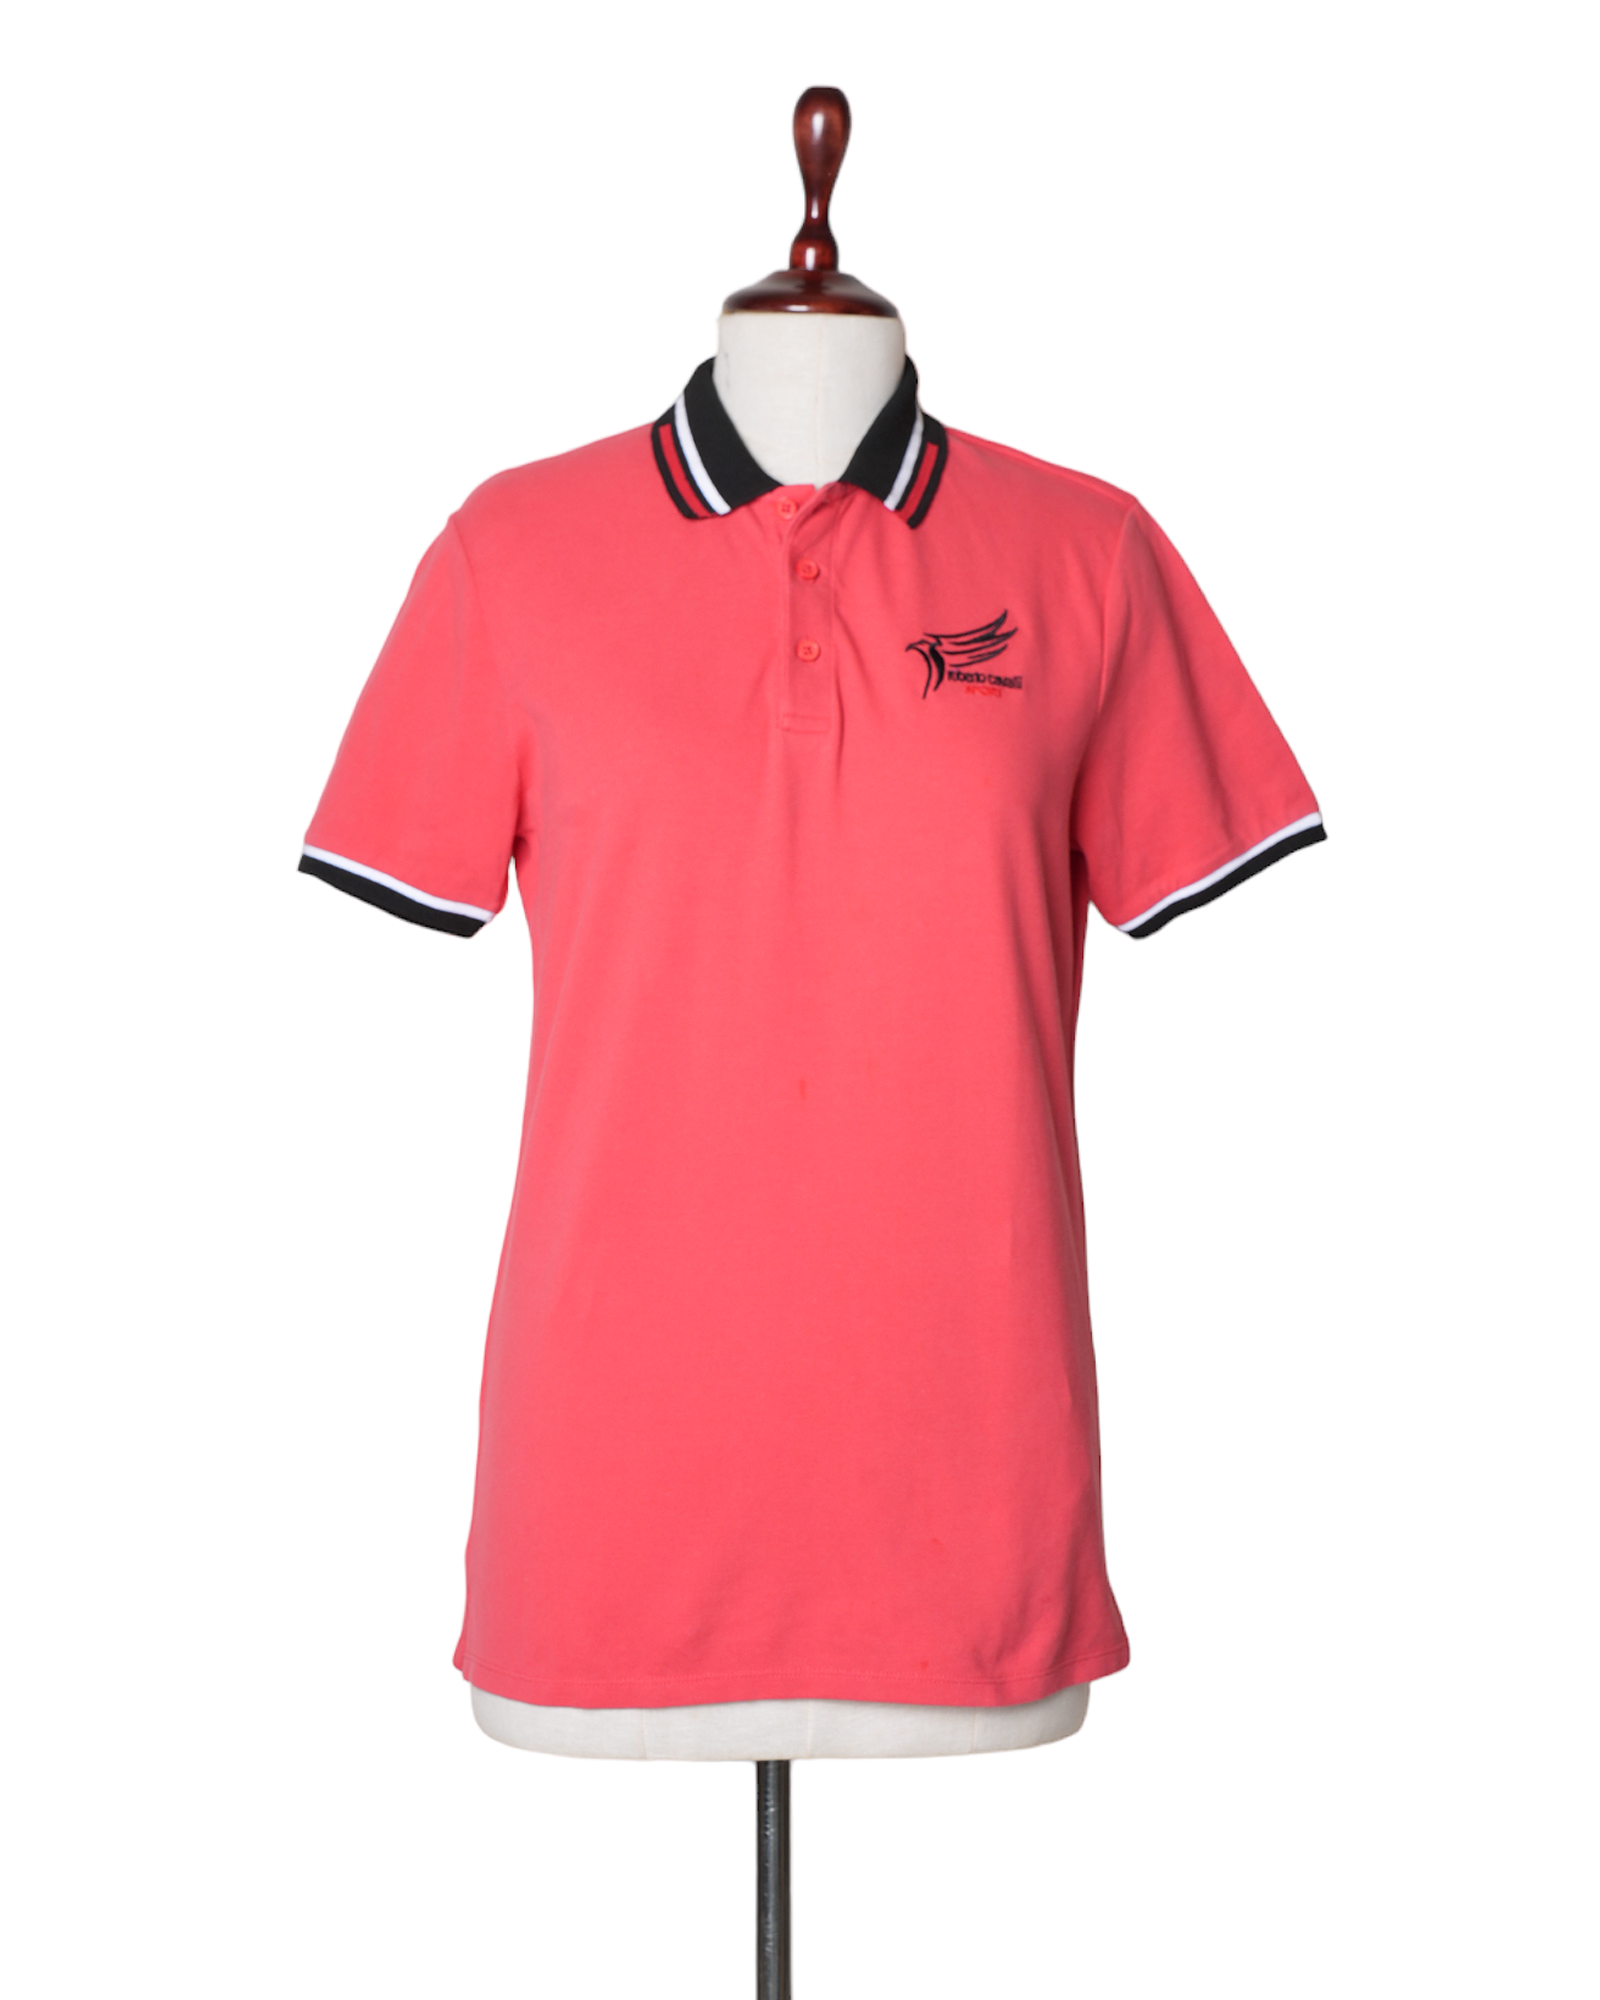 Roberto Cavalli Sport Red T-Shirt